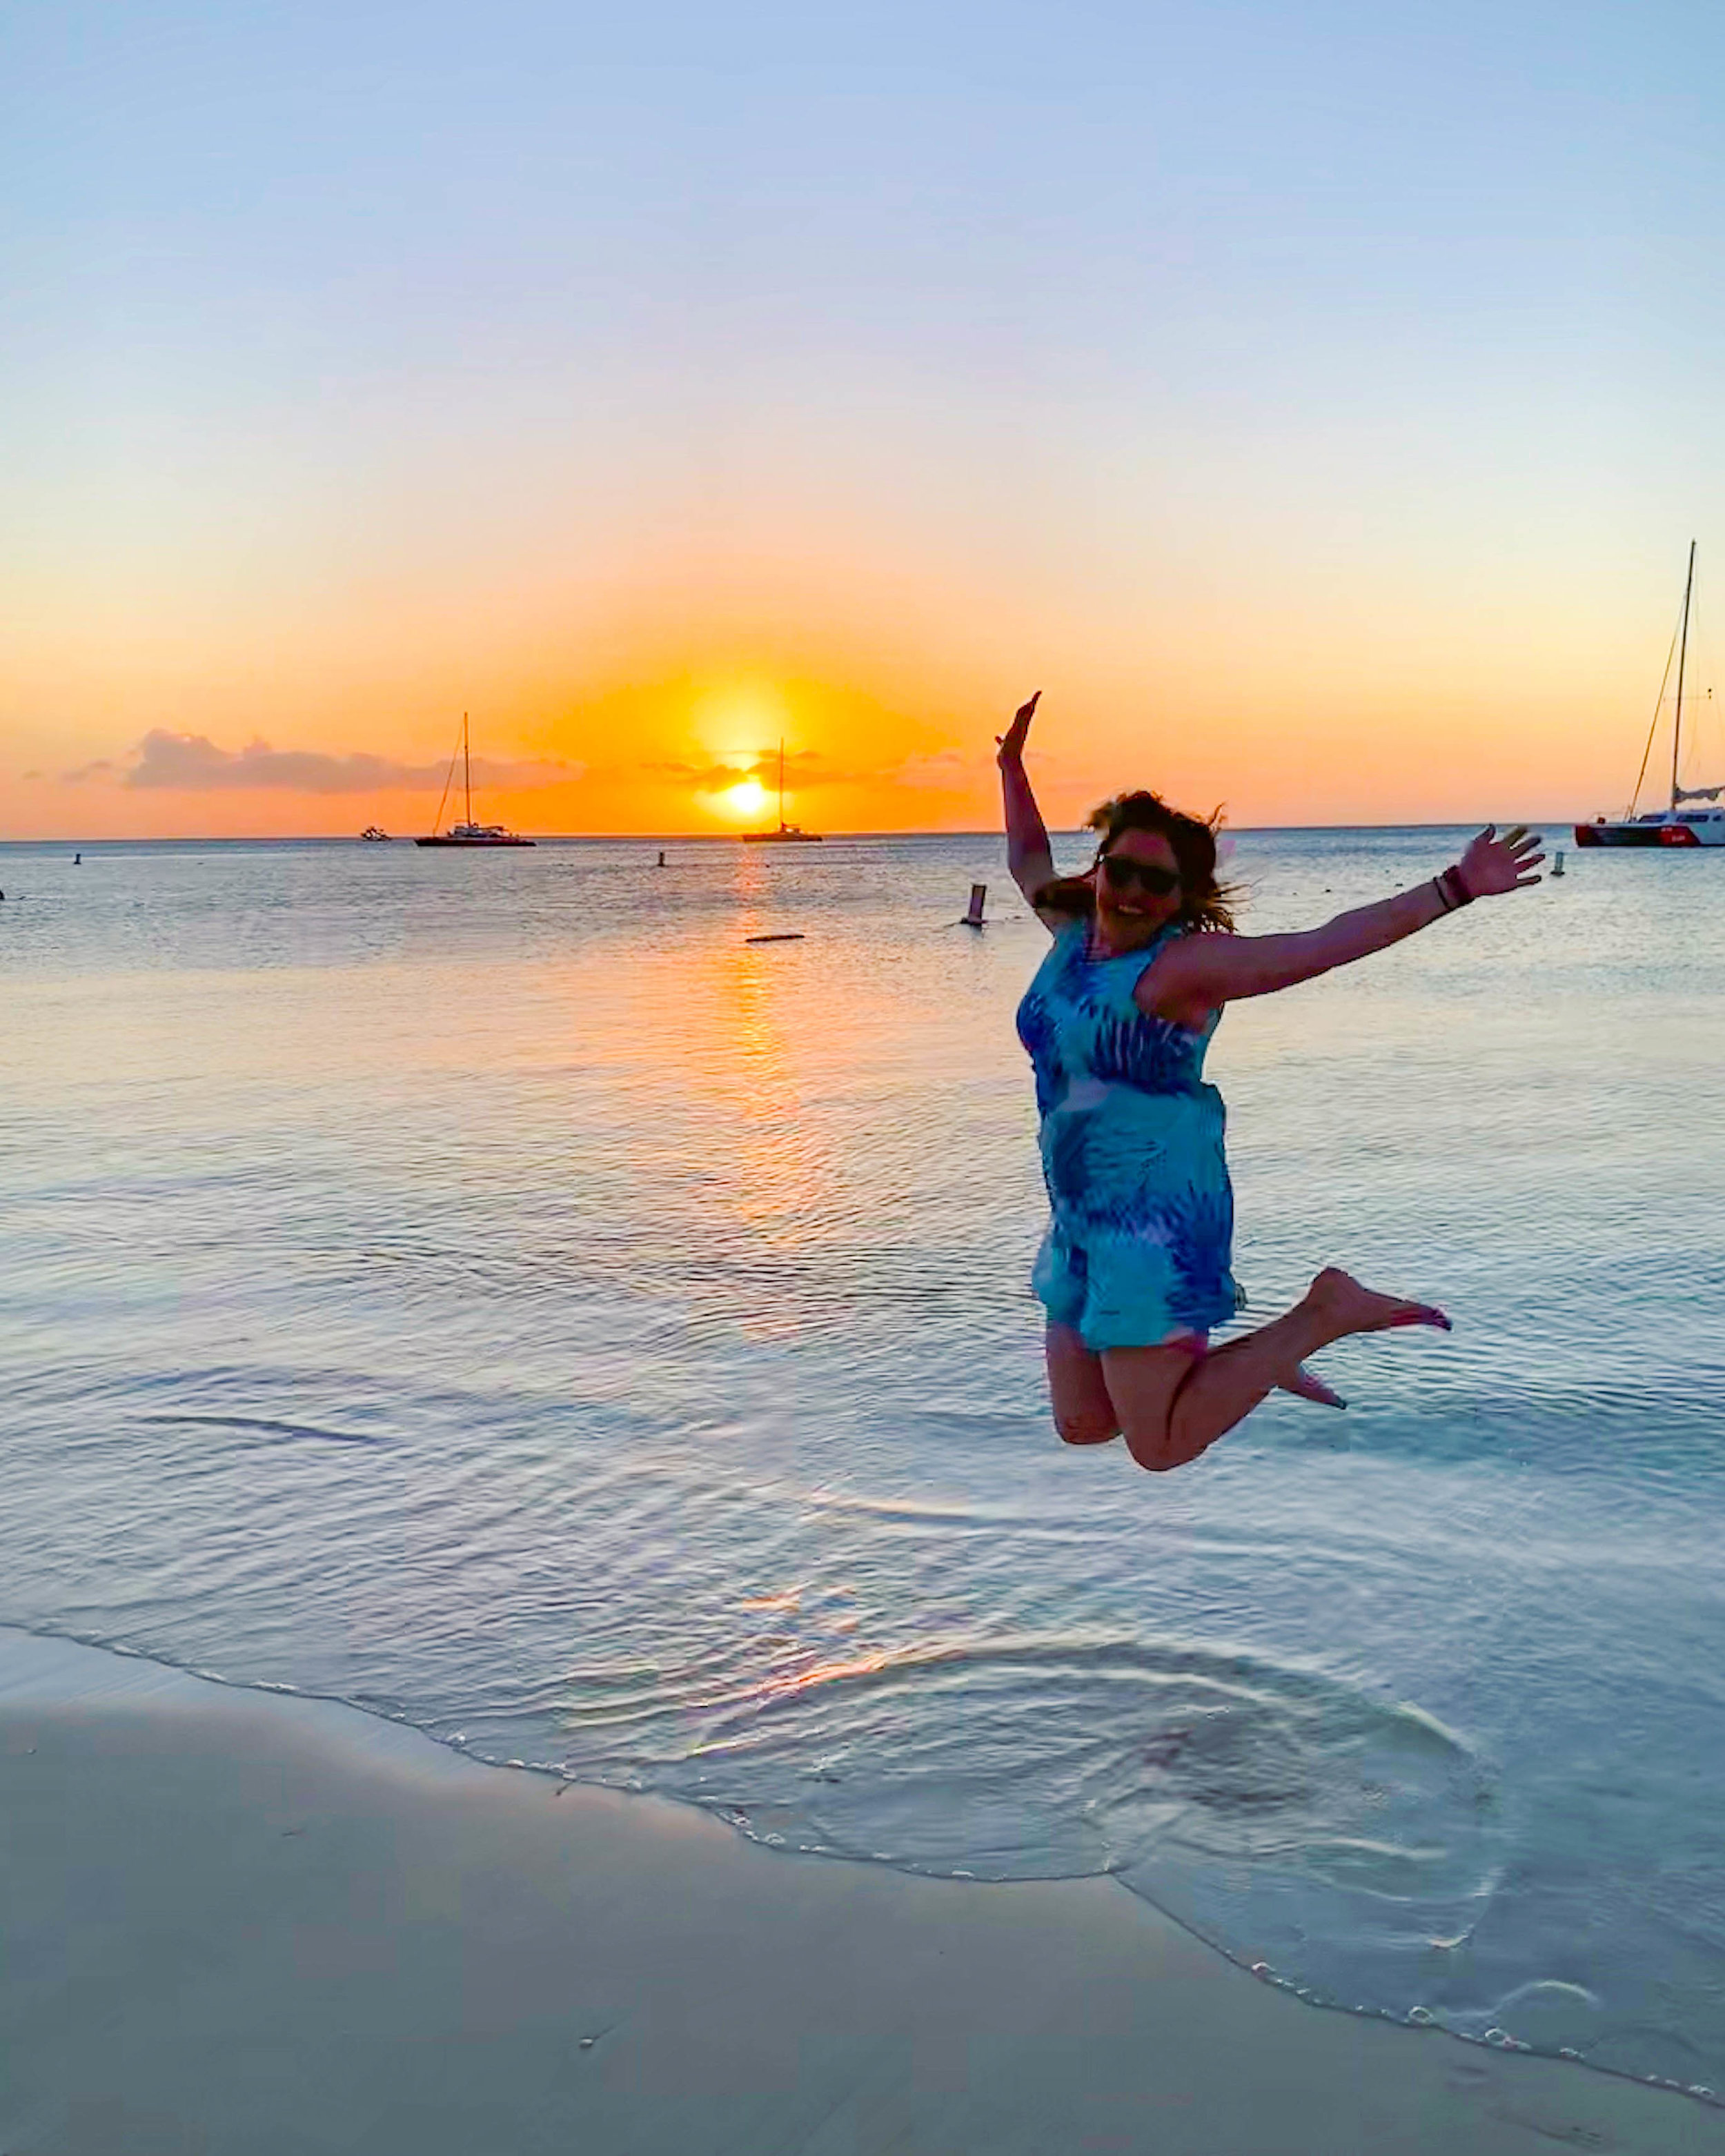 Jumping at Aruba Sunset beach time!